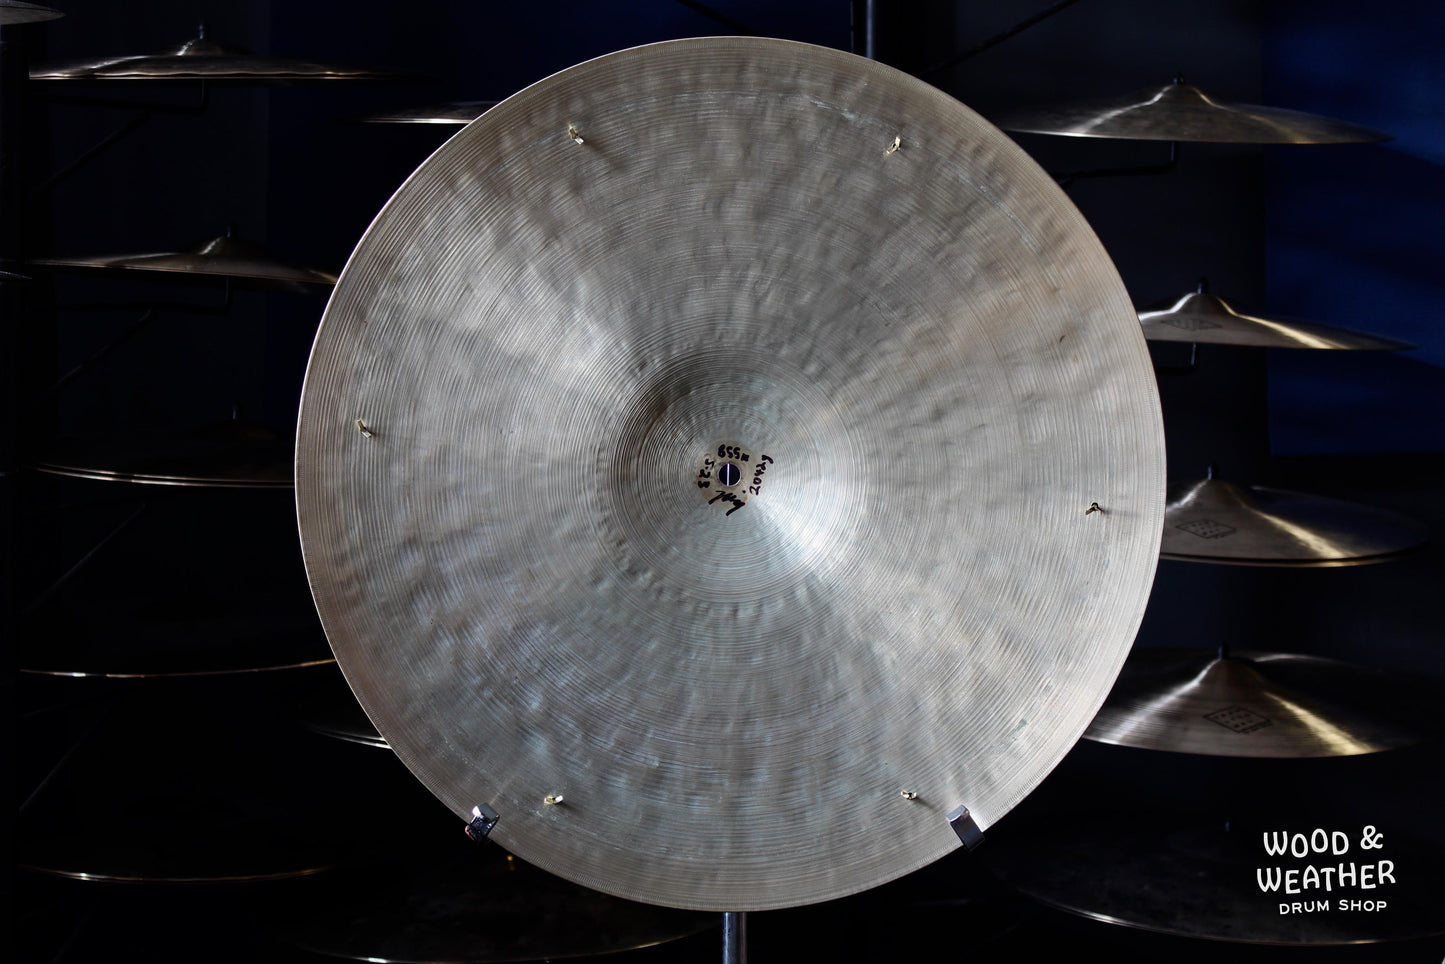 Mongiello Cymbals 20" Prestige Series Type III Eric Binder Signature Ride Cymbal w/ Rivets 2042g